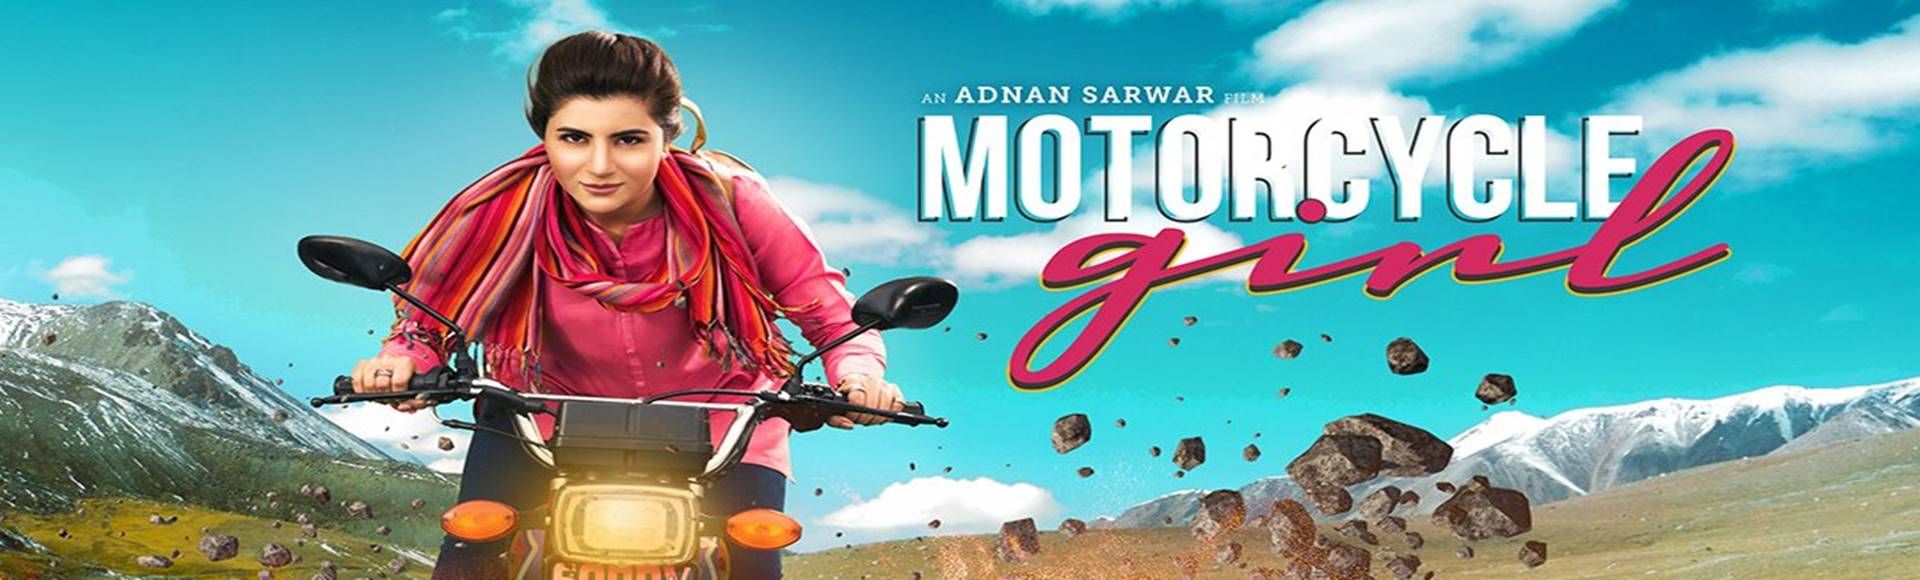 Motorcycle Girl Full Movie pta orgy